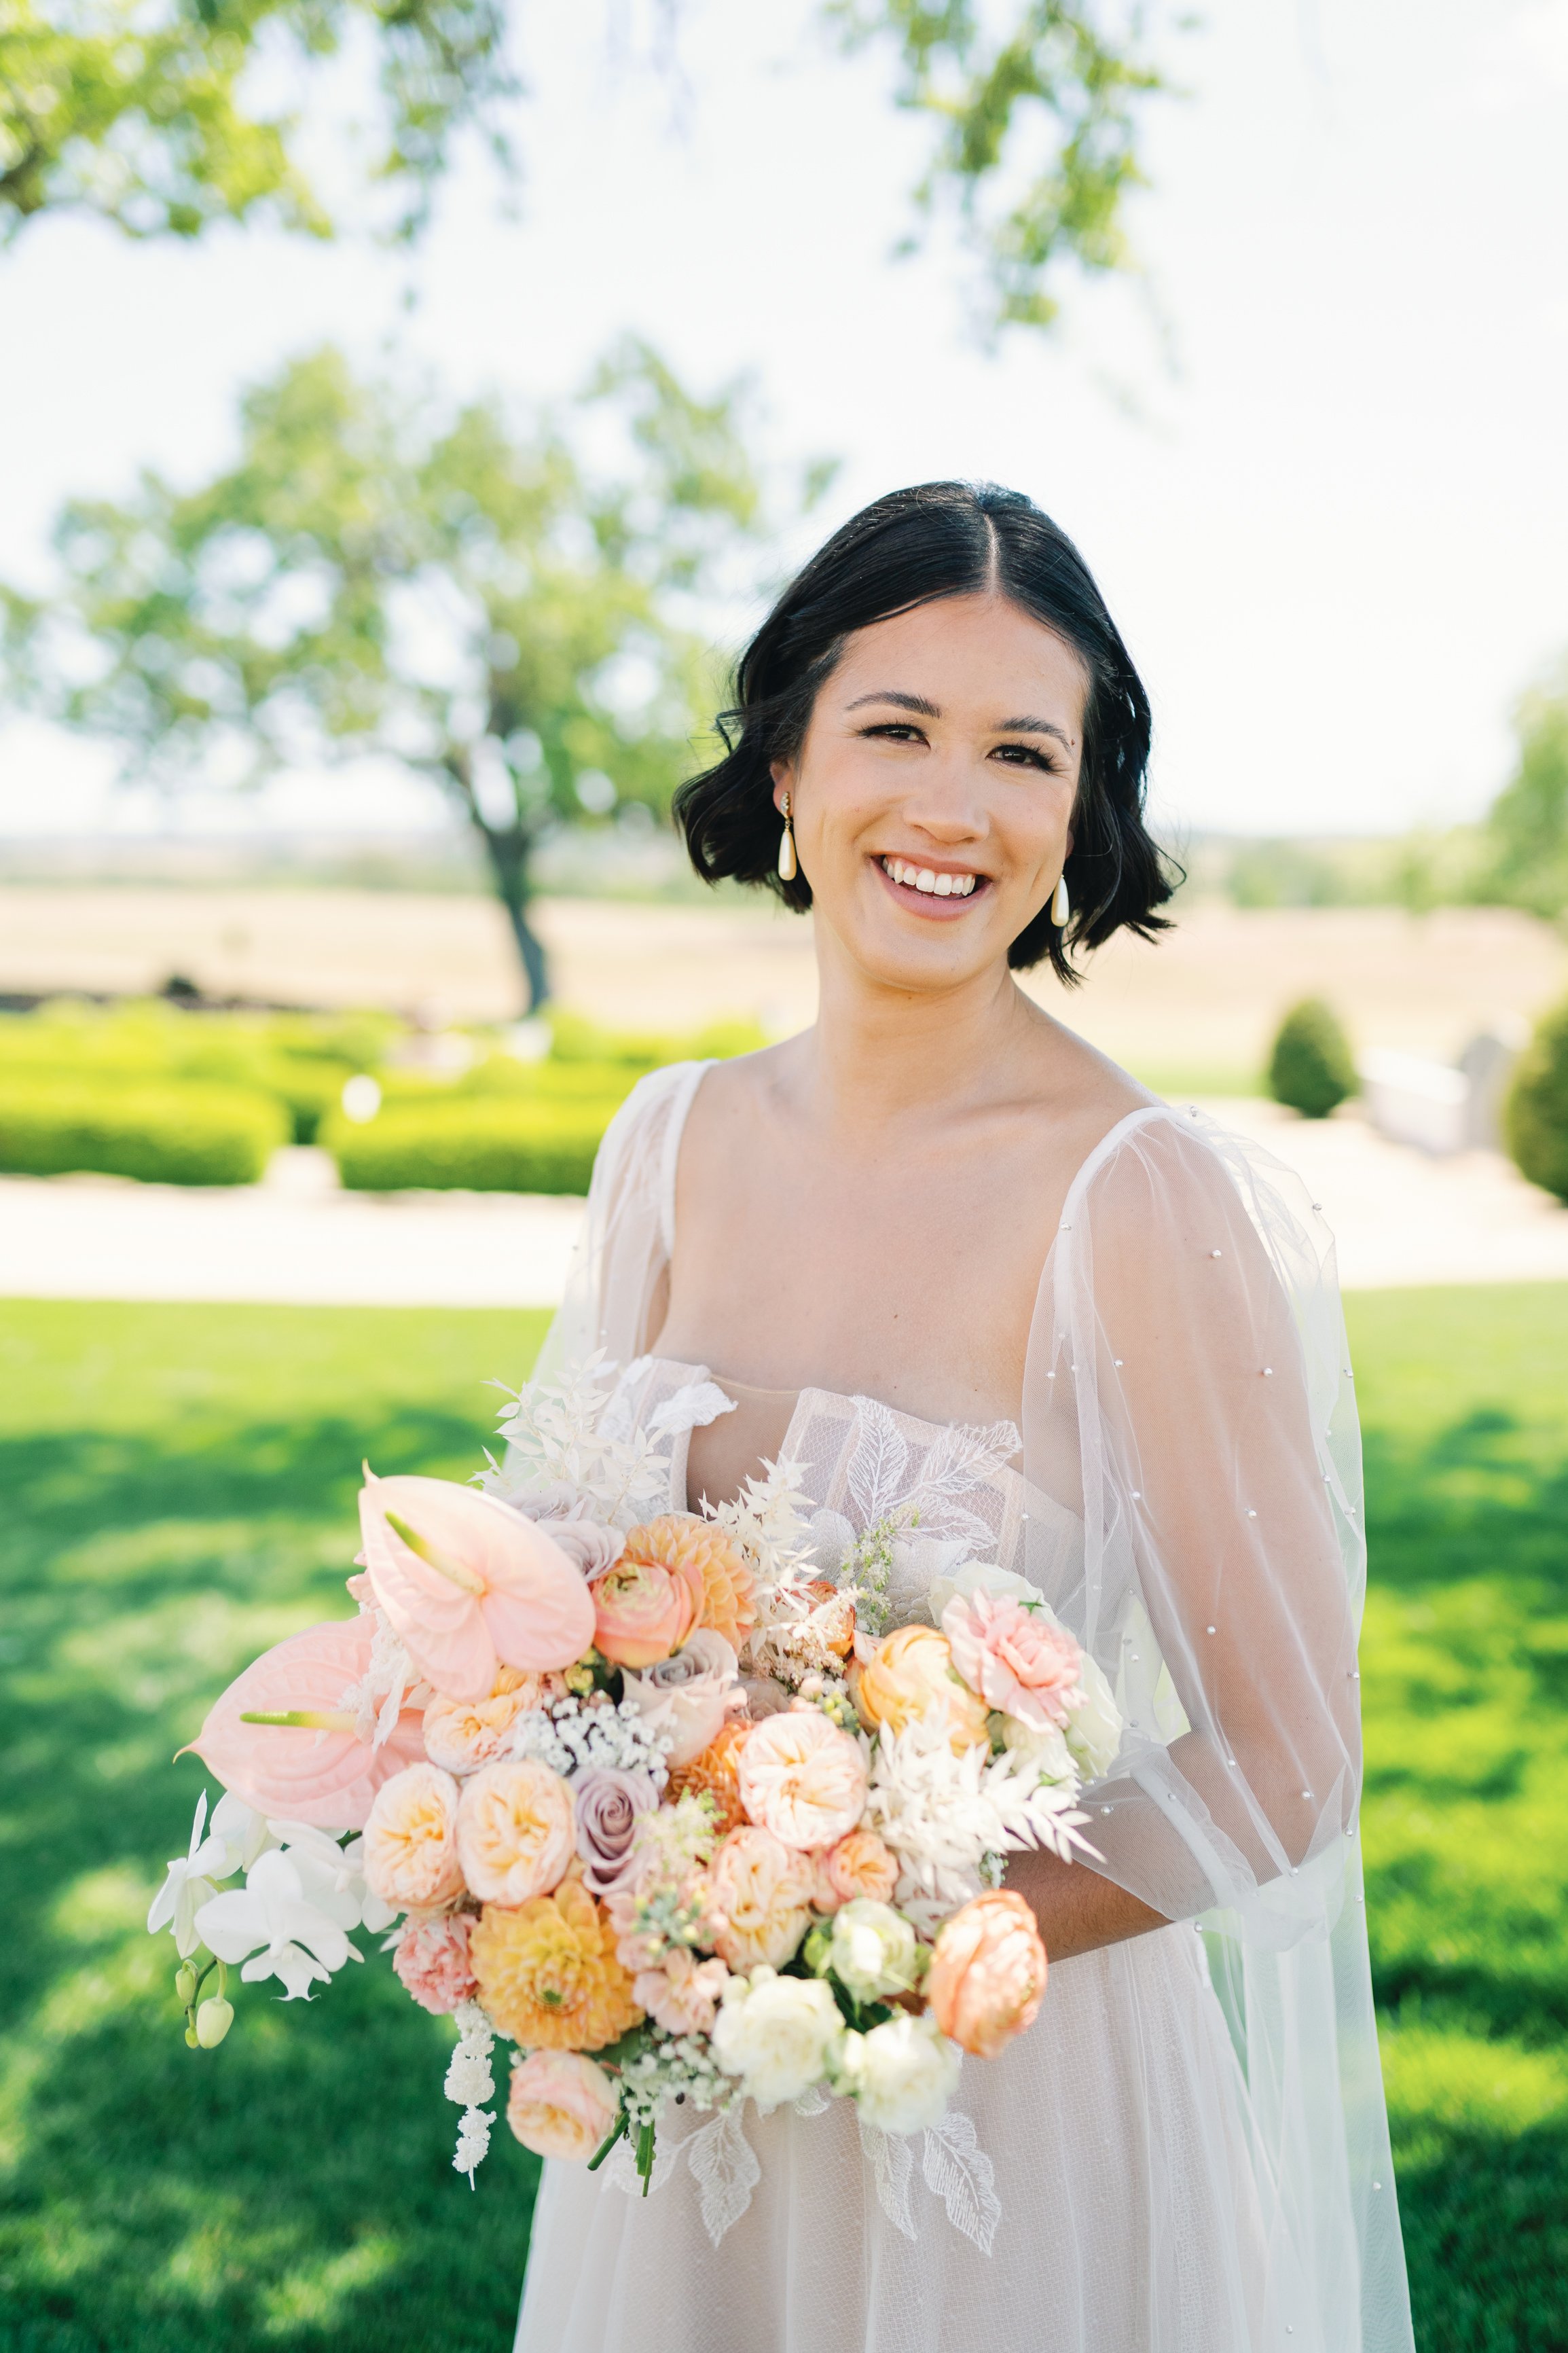 www.santabarbarawedding.com | Augusta Ottillia Photography | Megan Rose Events | Fallen Oaks Estate | Brooke Edelman | Meagan Fondren | Bride with Bouquet